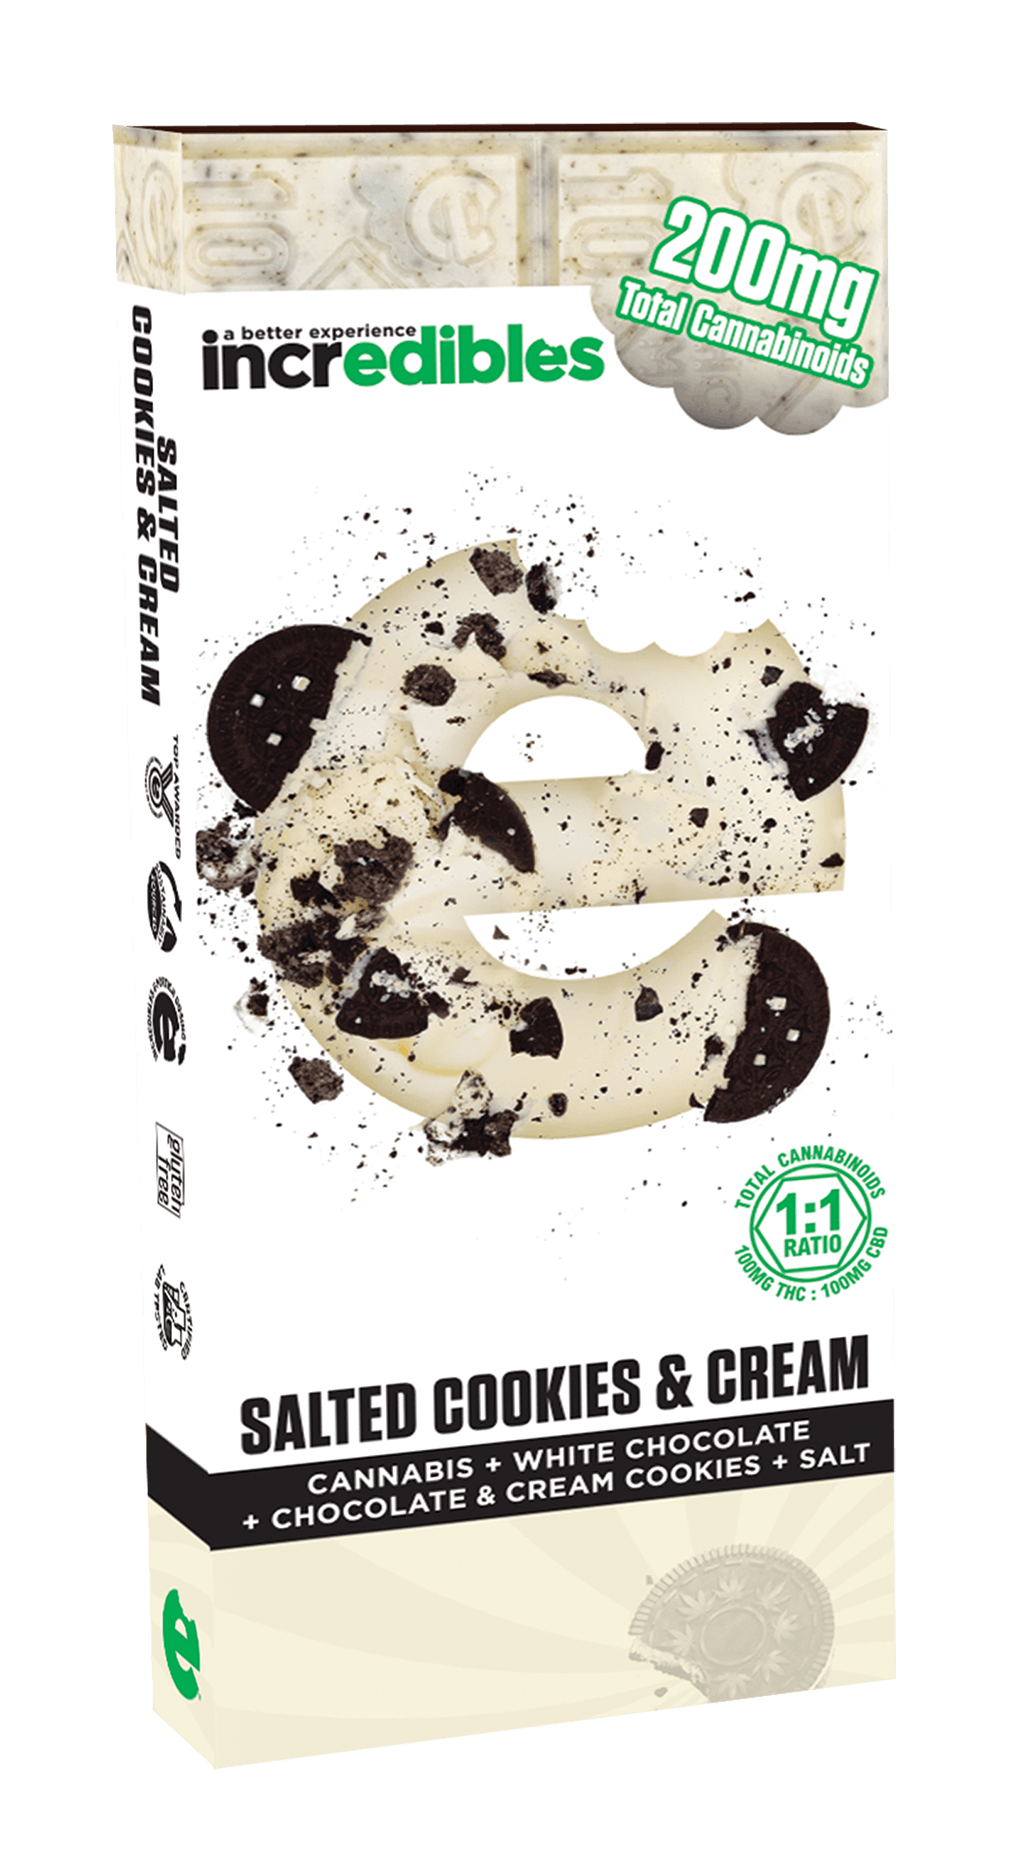 edible-incredibles-incredibles-salted-cookies-a-cream-11-cbd